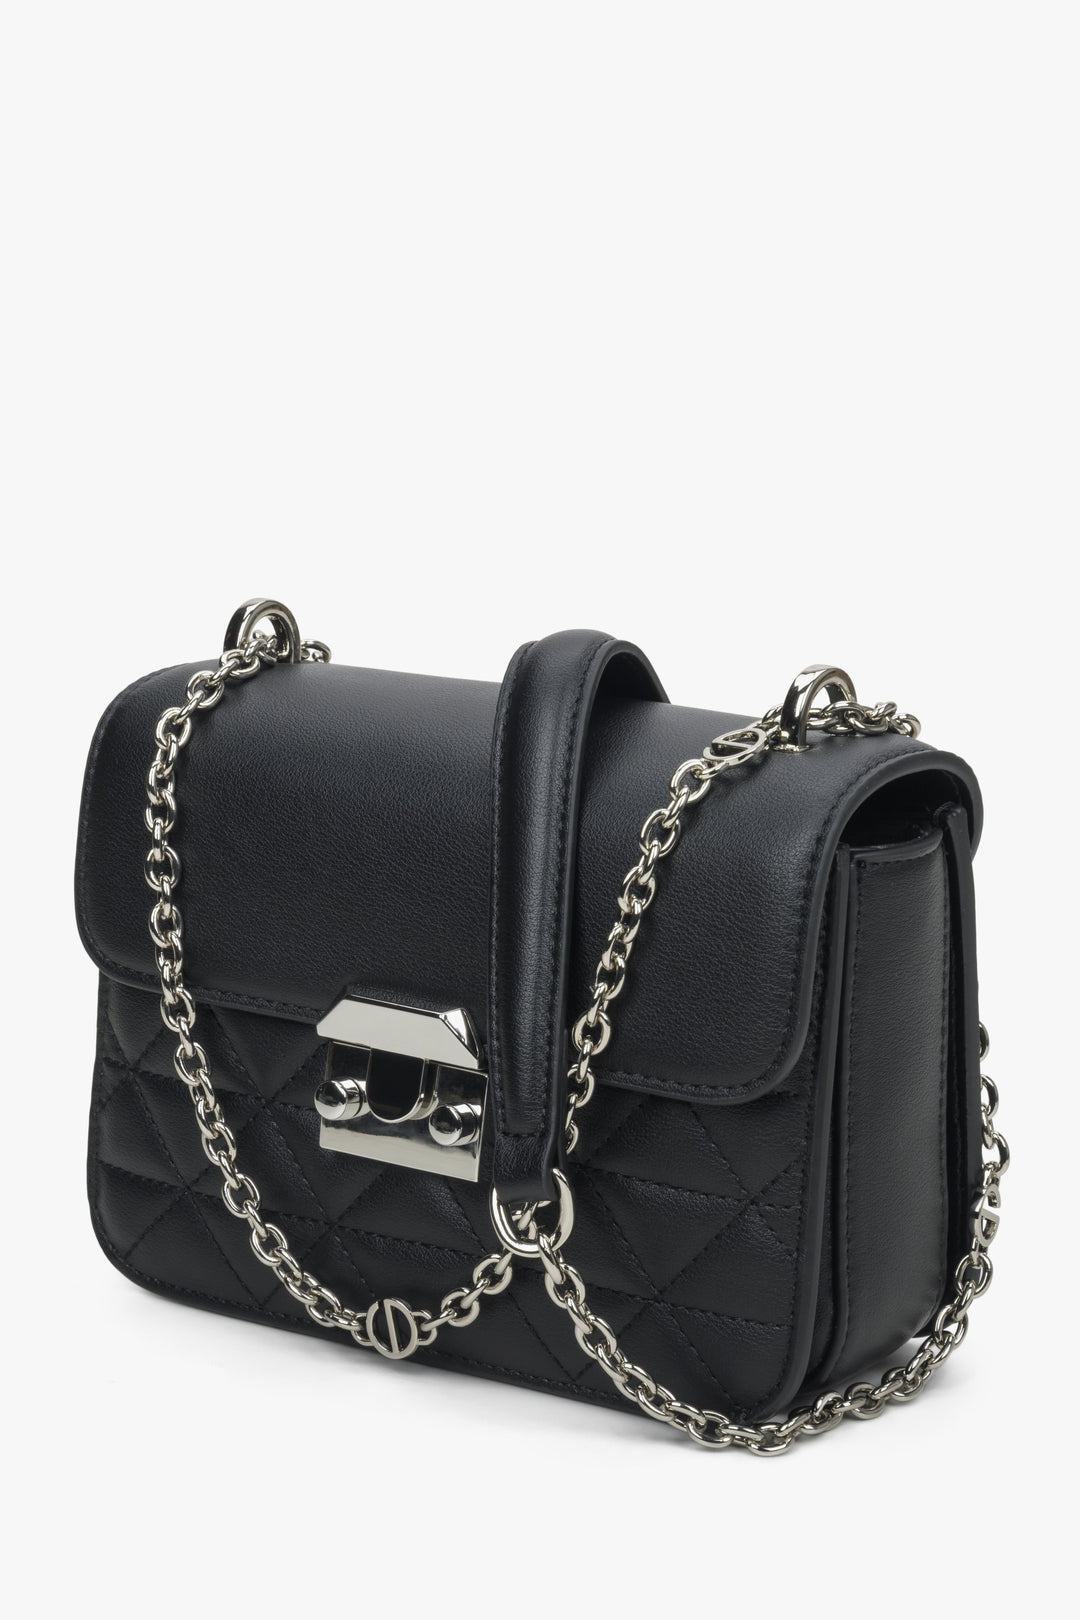 Estro black leather shoulder bag with silver accents.